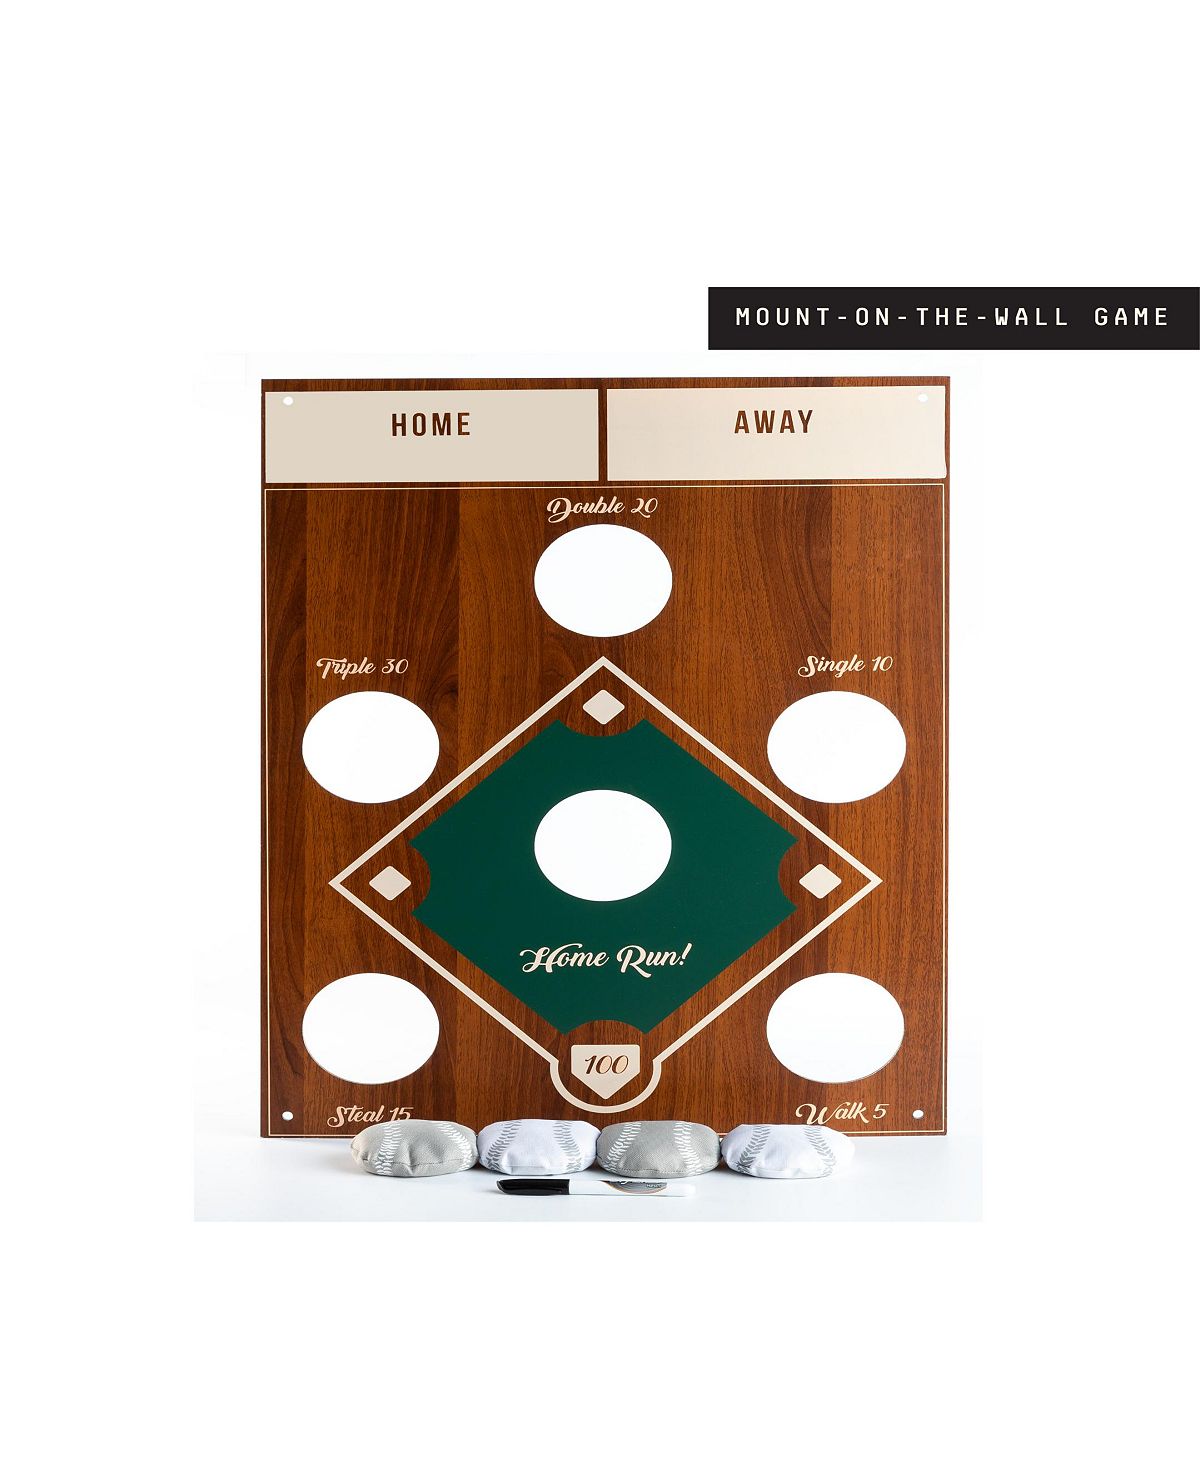 Studio Mercantile Bean Bag Toss Hanging Baseball Game Set 10 Pieces Open Miscellaneous